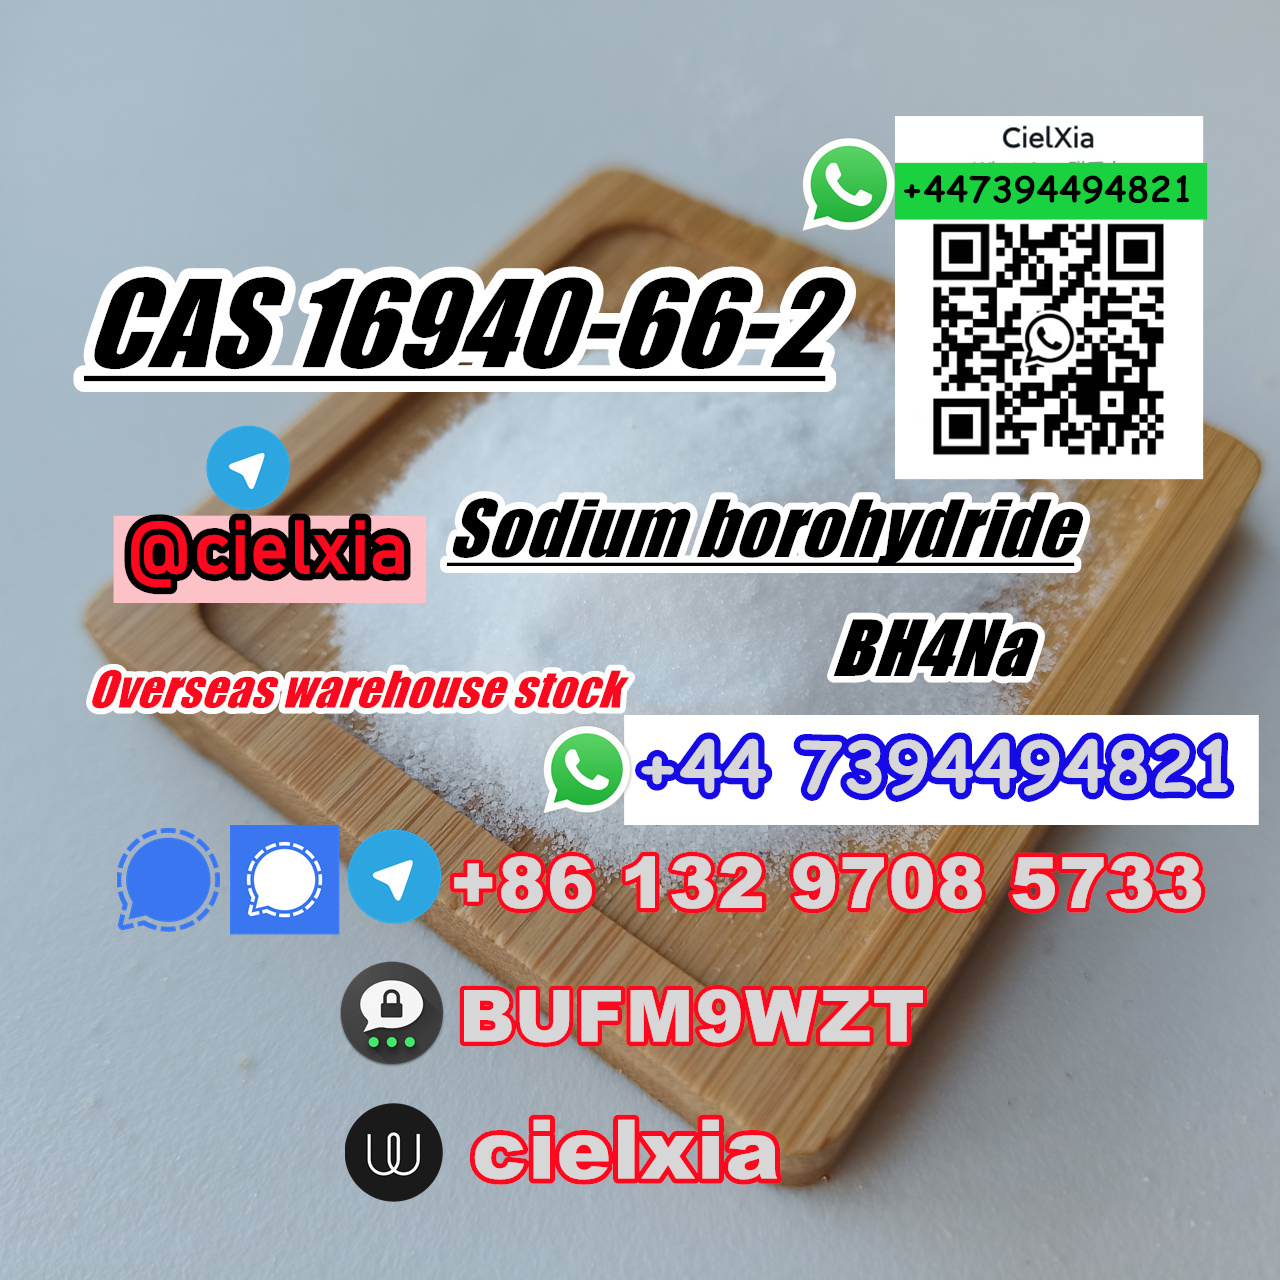 New Arrival BH4Na Sodium borohydride CAS 16940-66-2 - photo